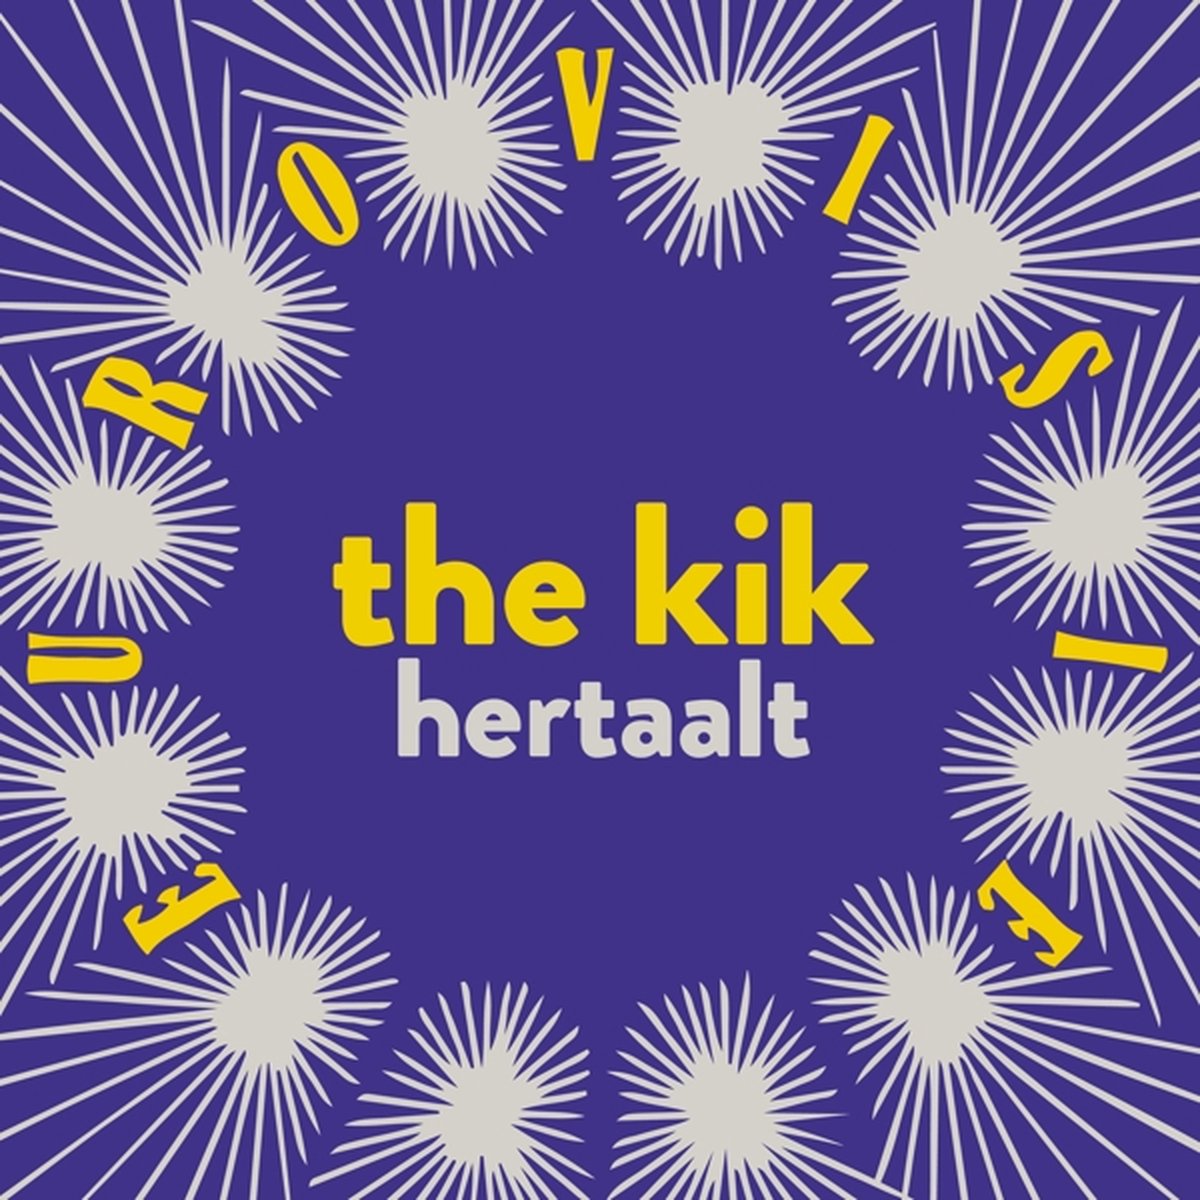 The Kik hertaalt Eurovisie (LP) - The Kik